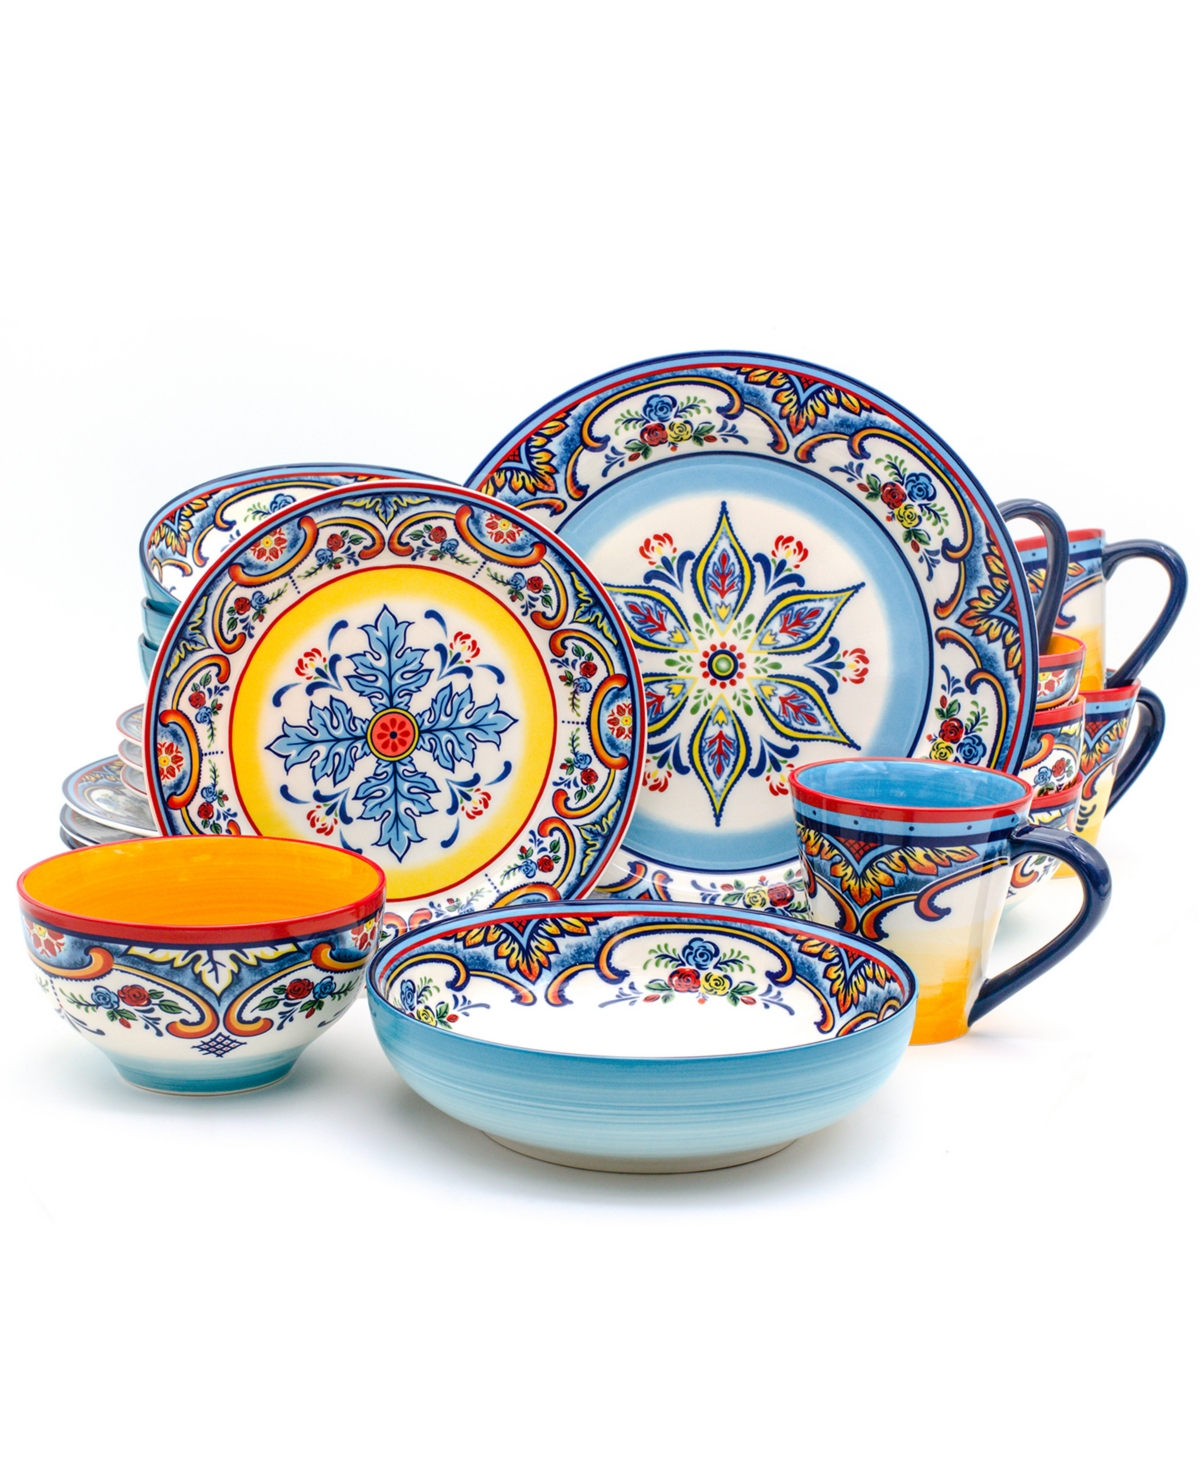 Zanzibar 20 Piece Stoneware Dinnerware Set - Multicolor